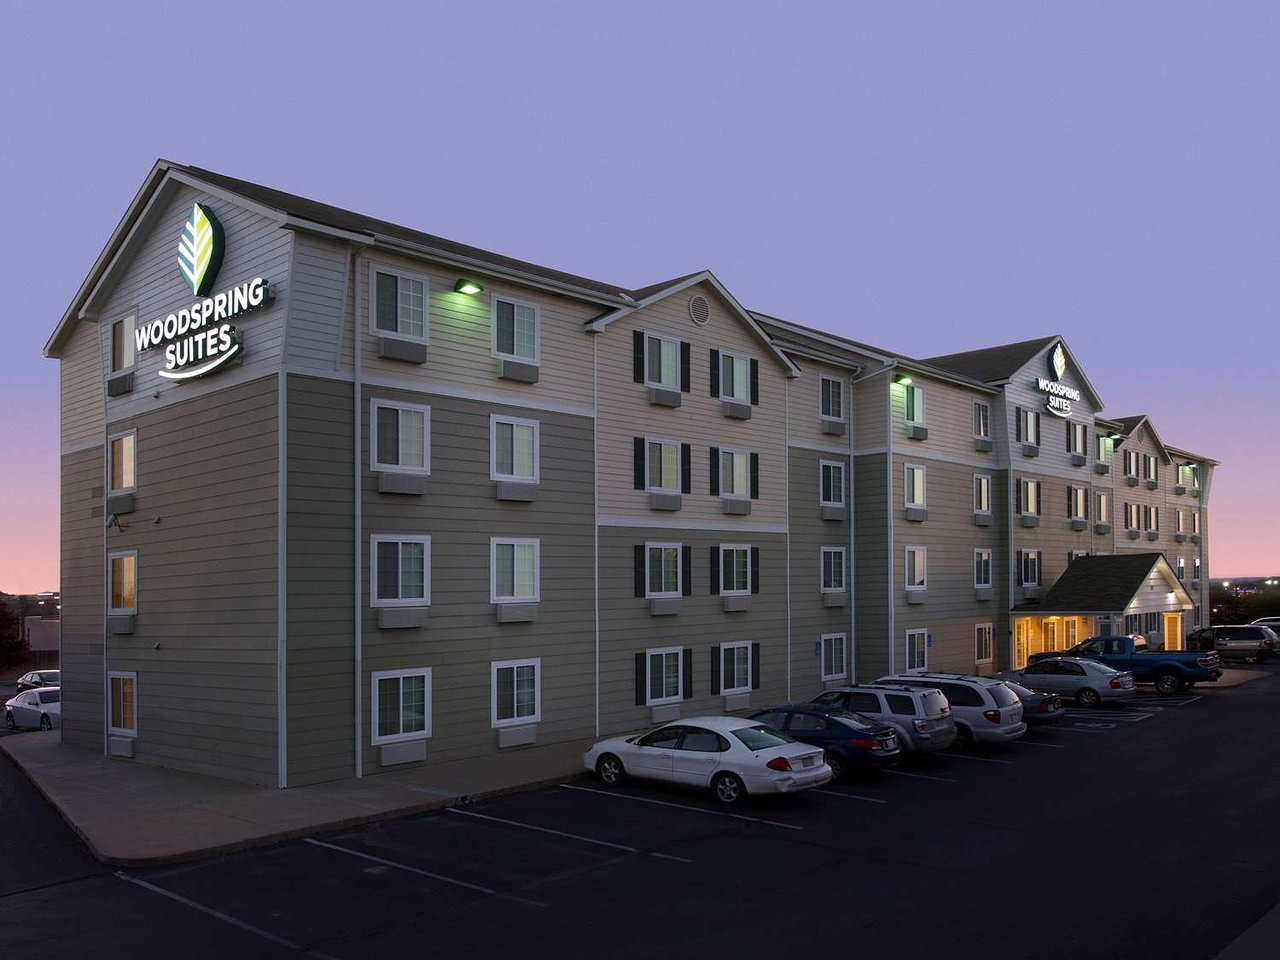 Photo of WoodSpring Suites Topeka, Topeka, KS